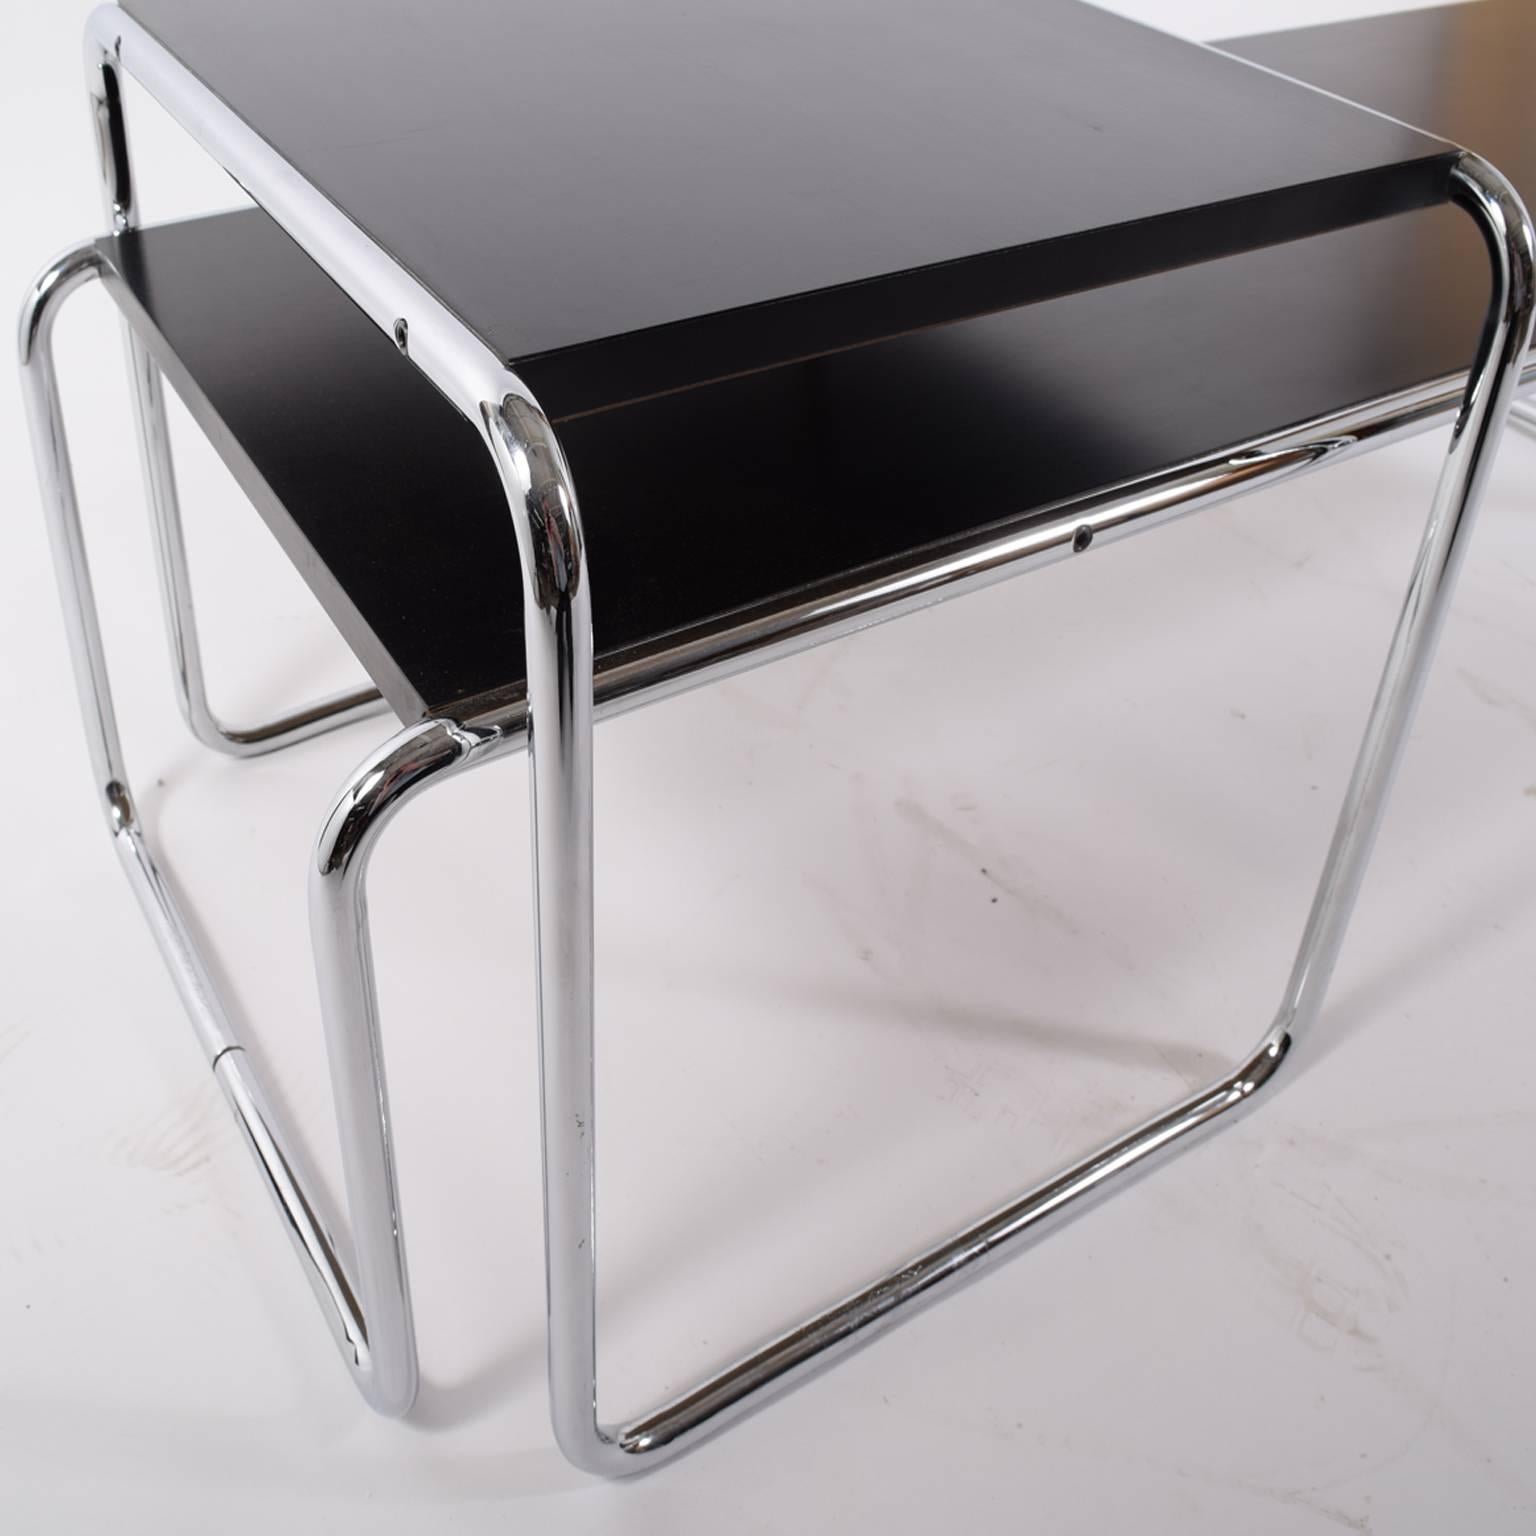 Bauhaus Laccio Tables Design Marcel Breuer, 1925 for Knoll